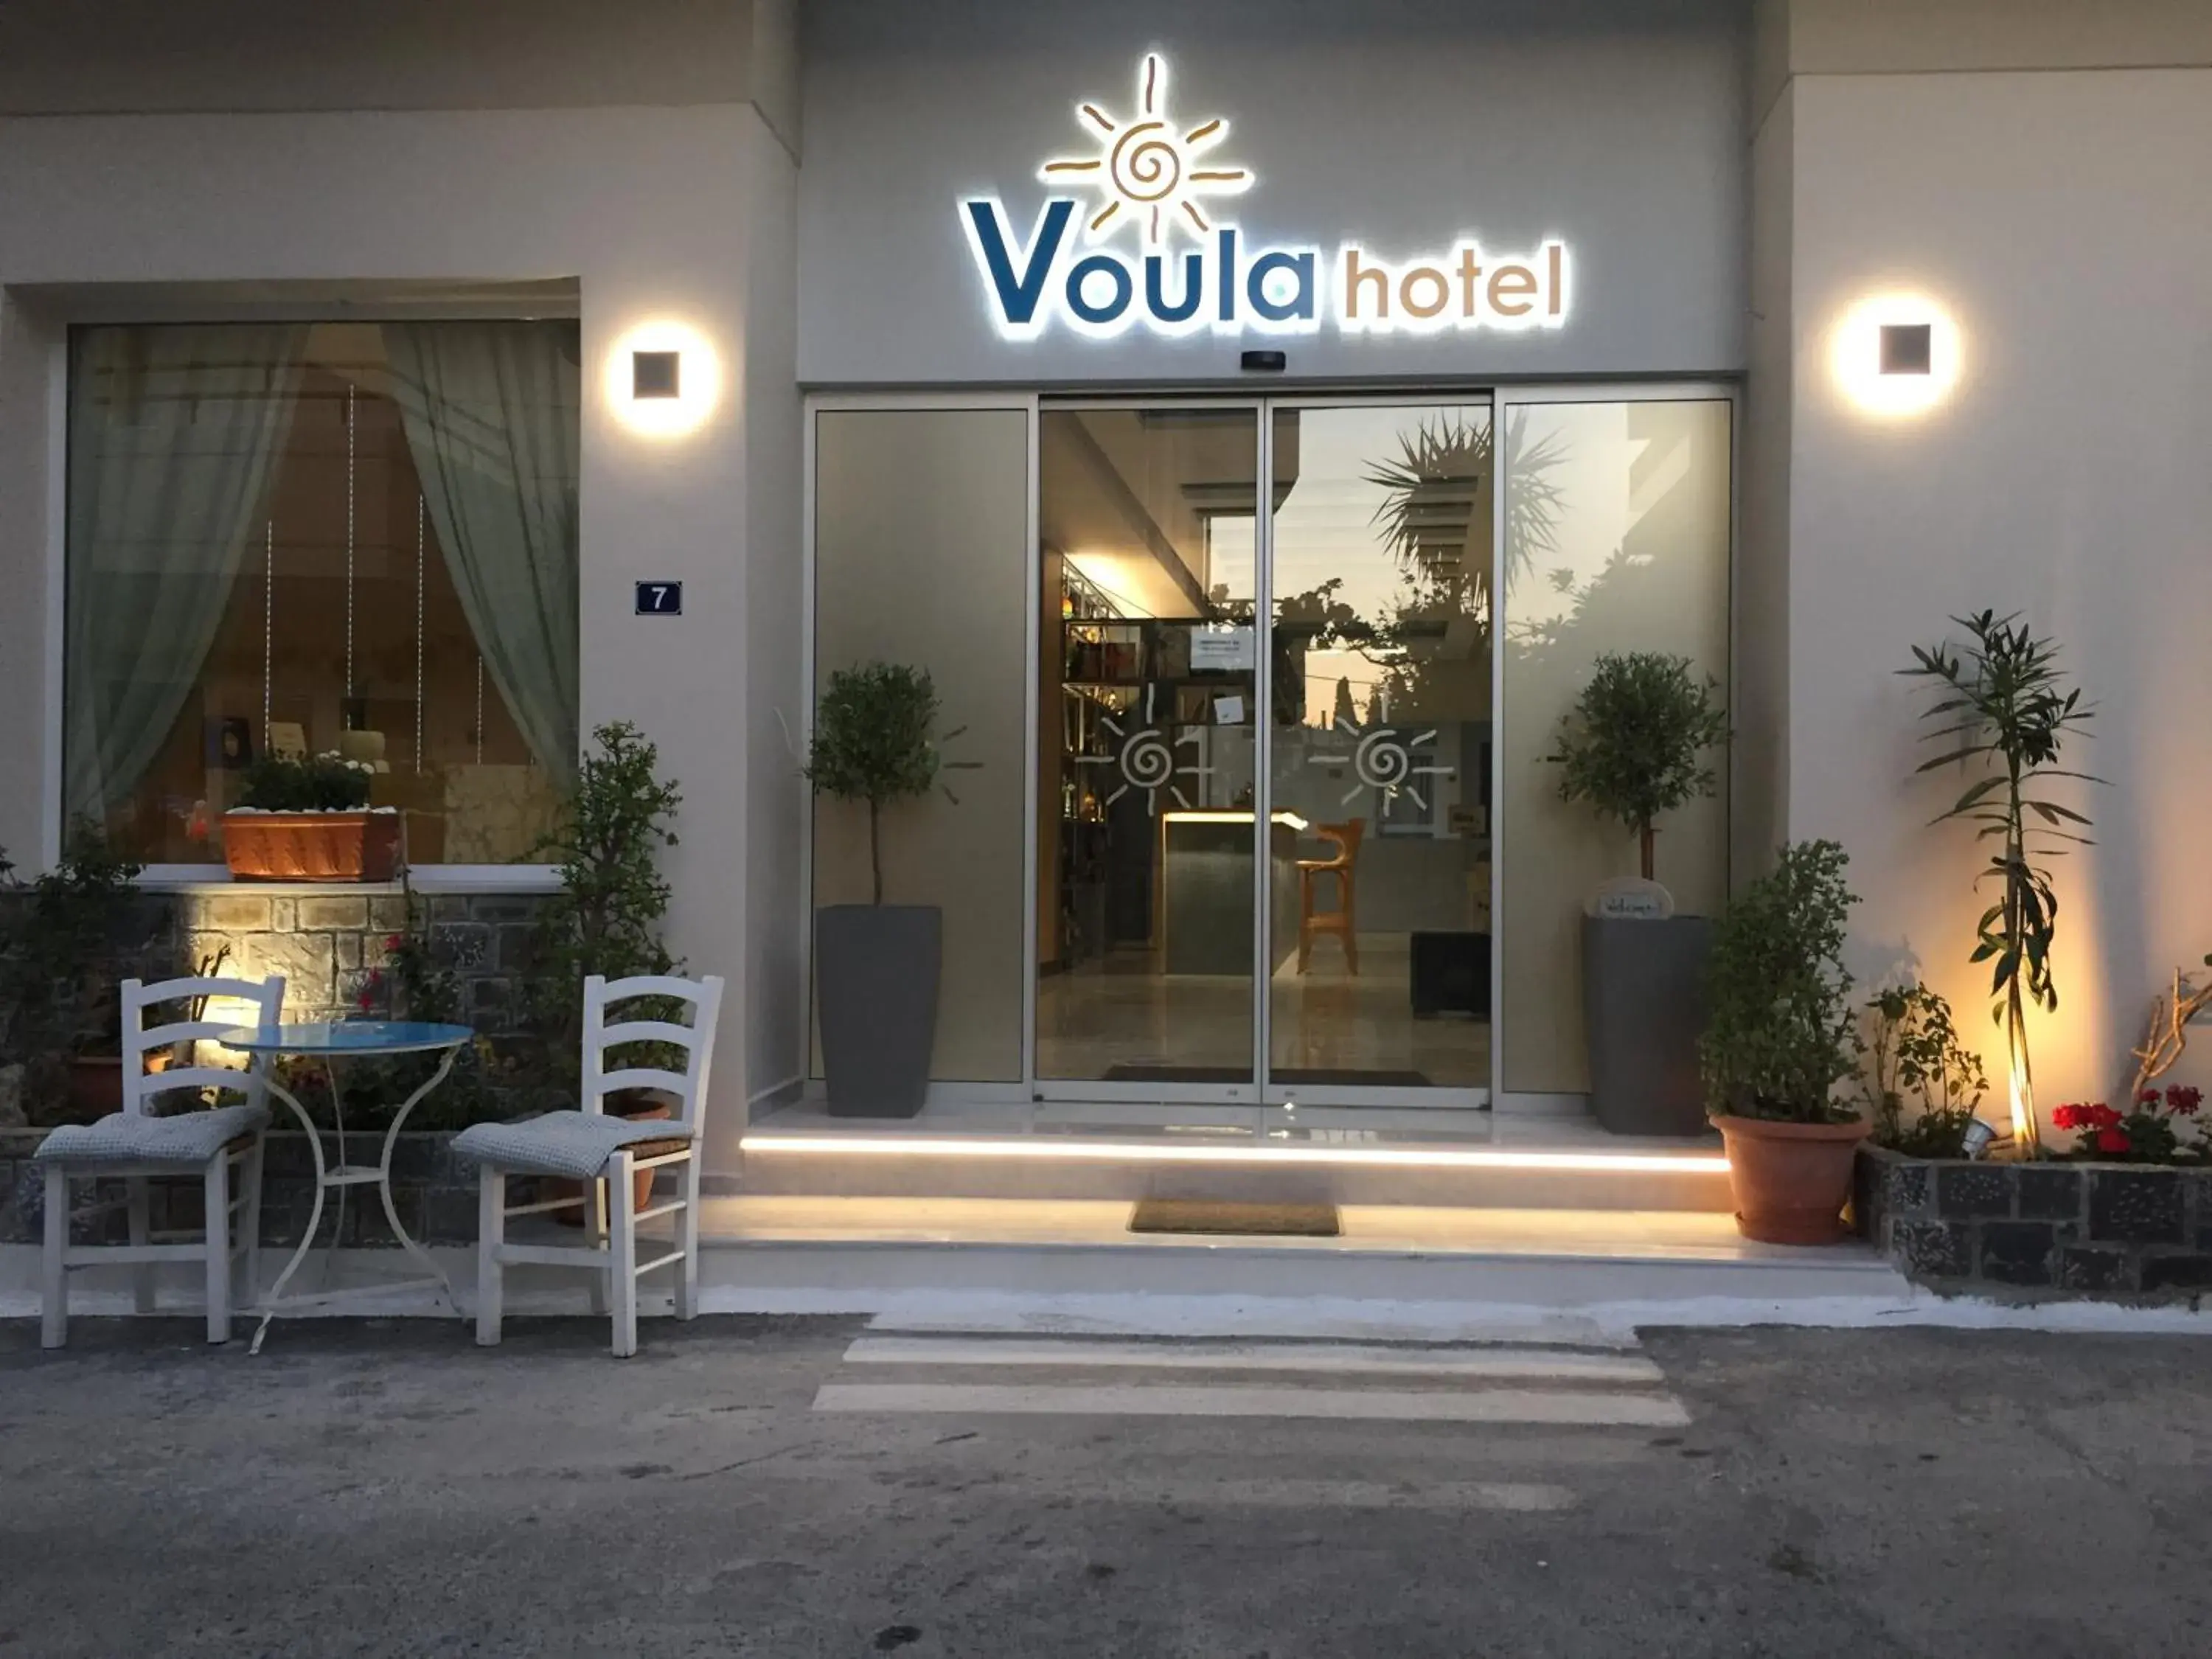 Property logo or sign in Voula Hotel